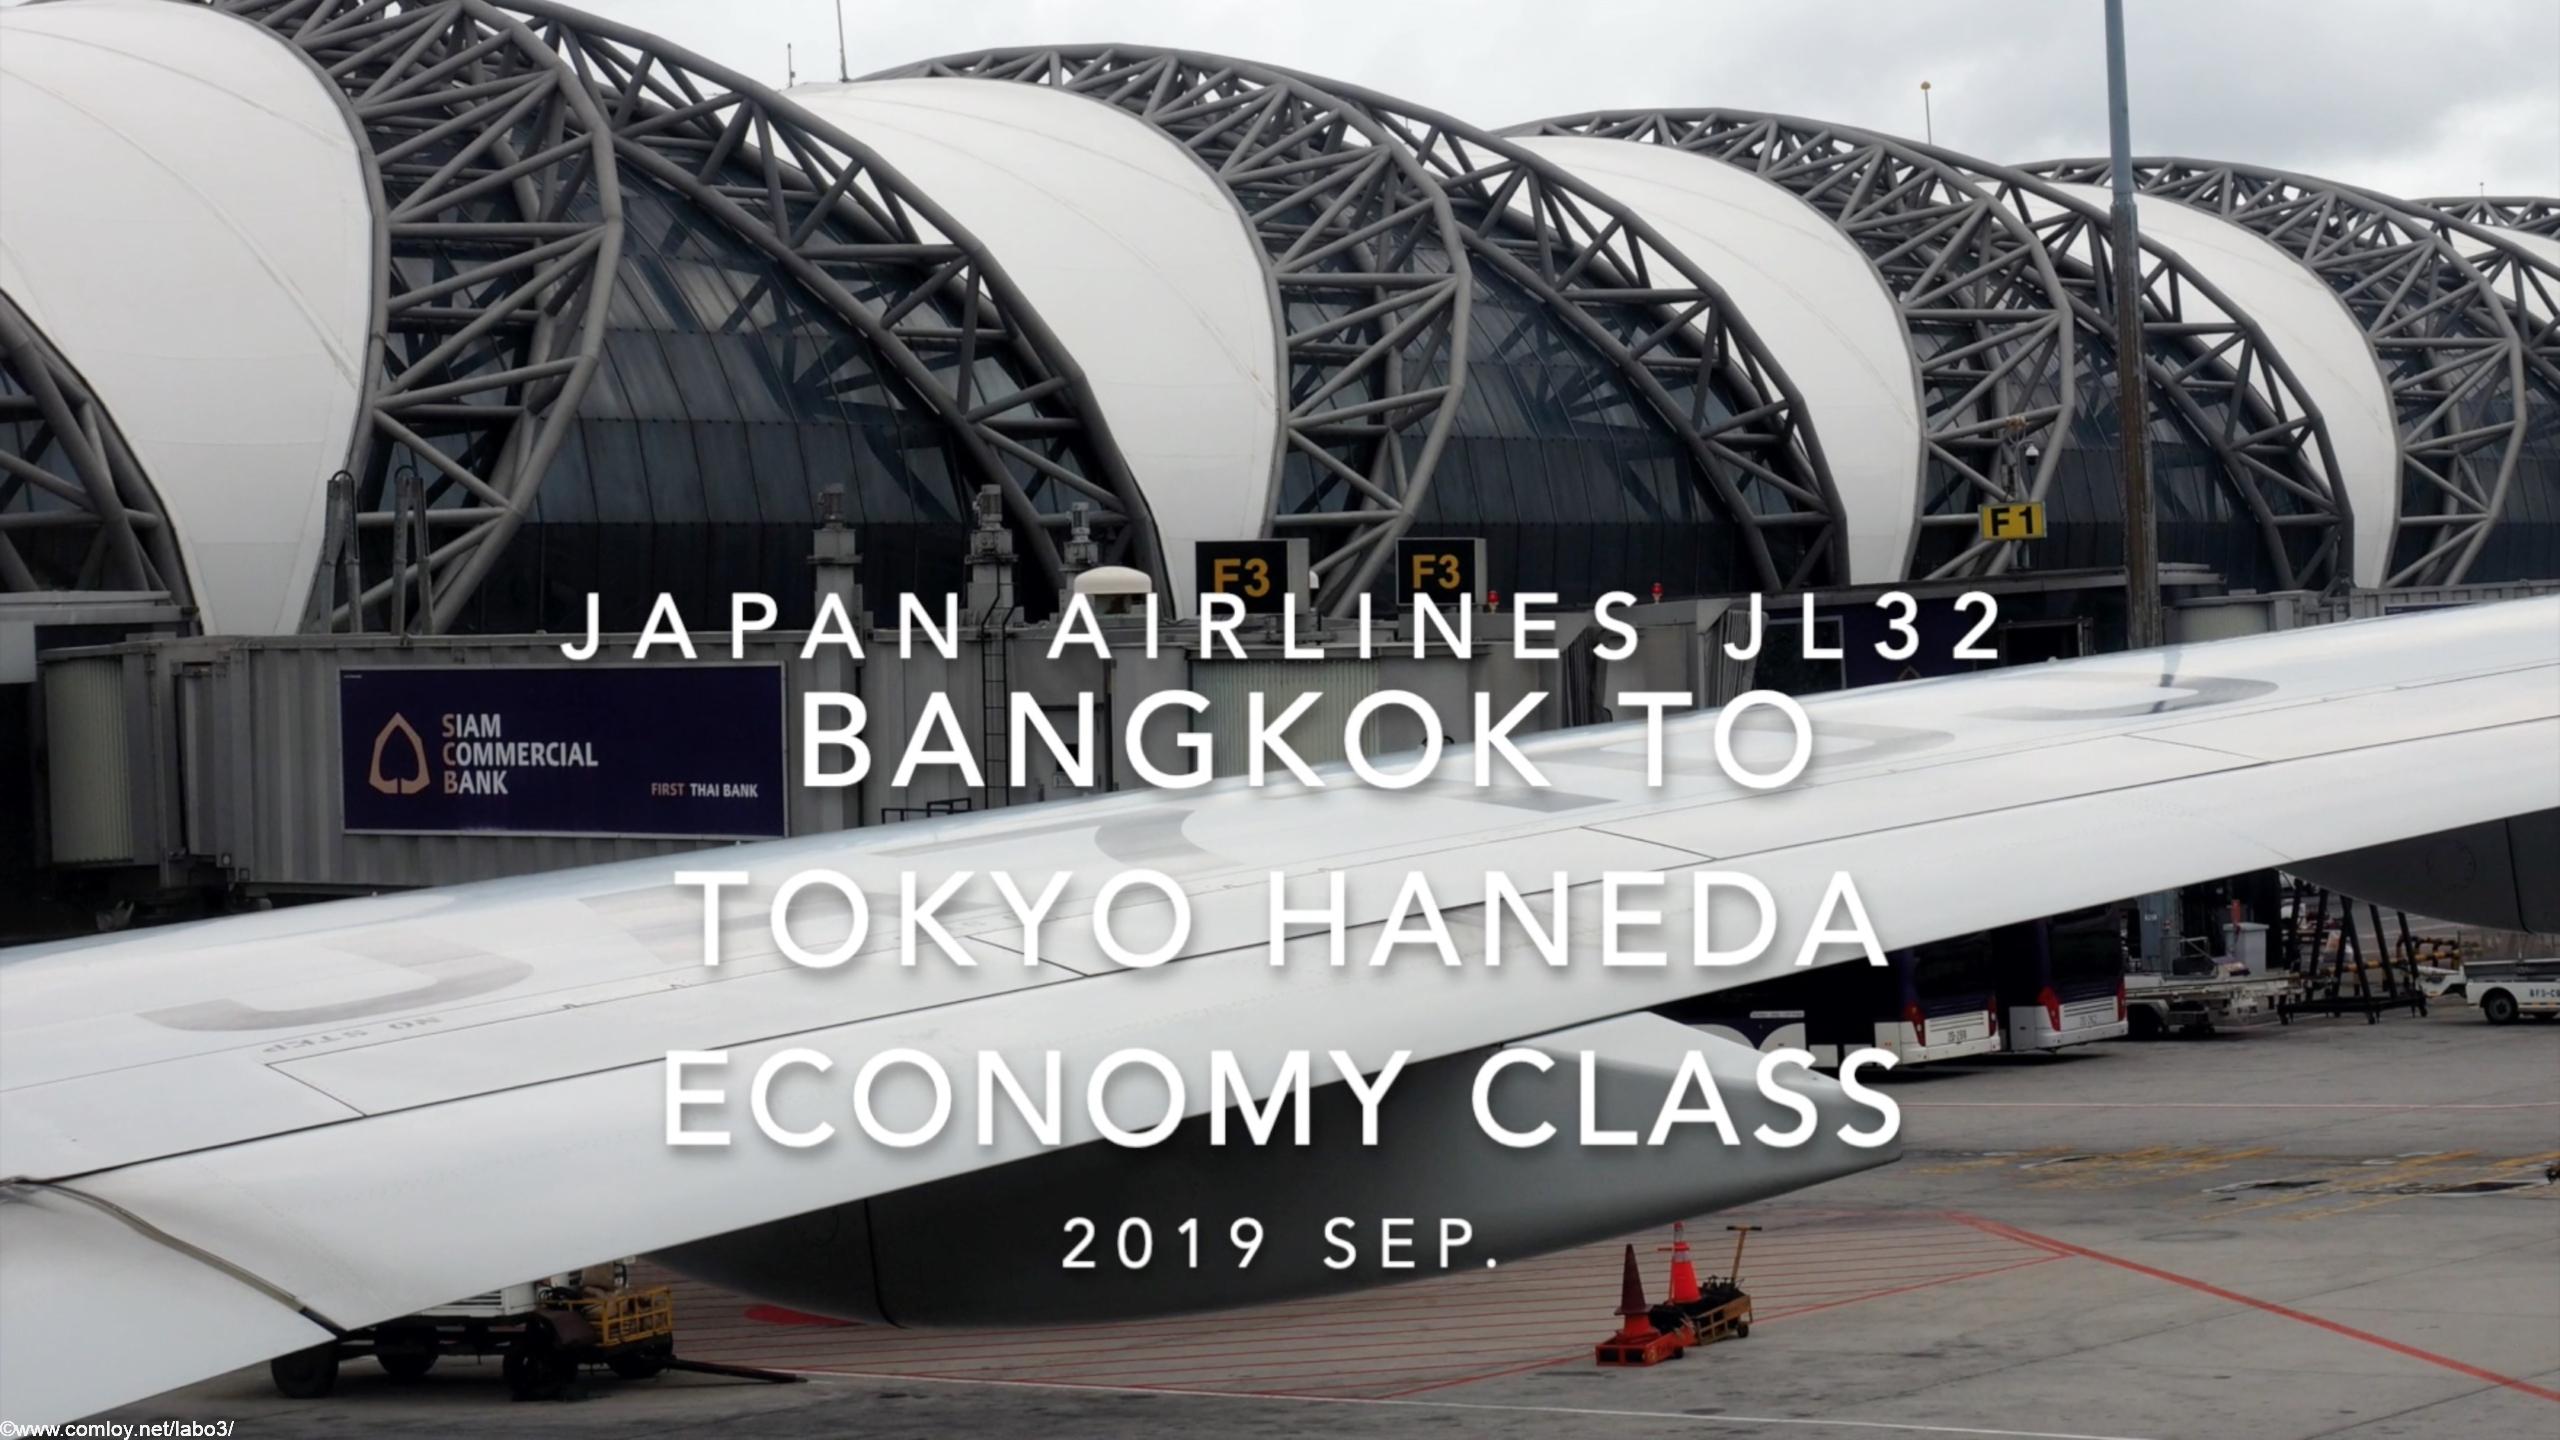 【Flight Report】Japan airlines JL32 BANGKOK TO TOKYO HANEDA 2019 SEP 日本航空 バンコク - 羽田 搭乗記